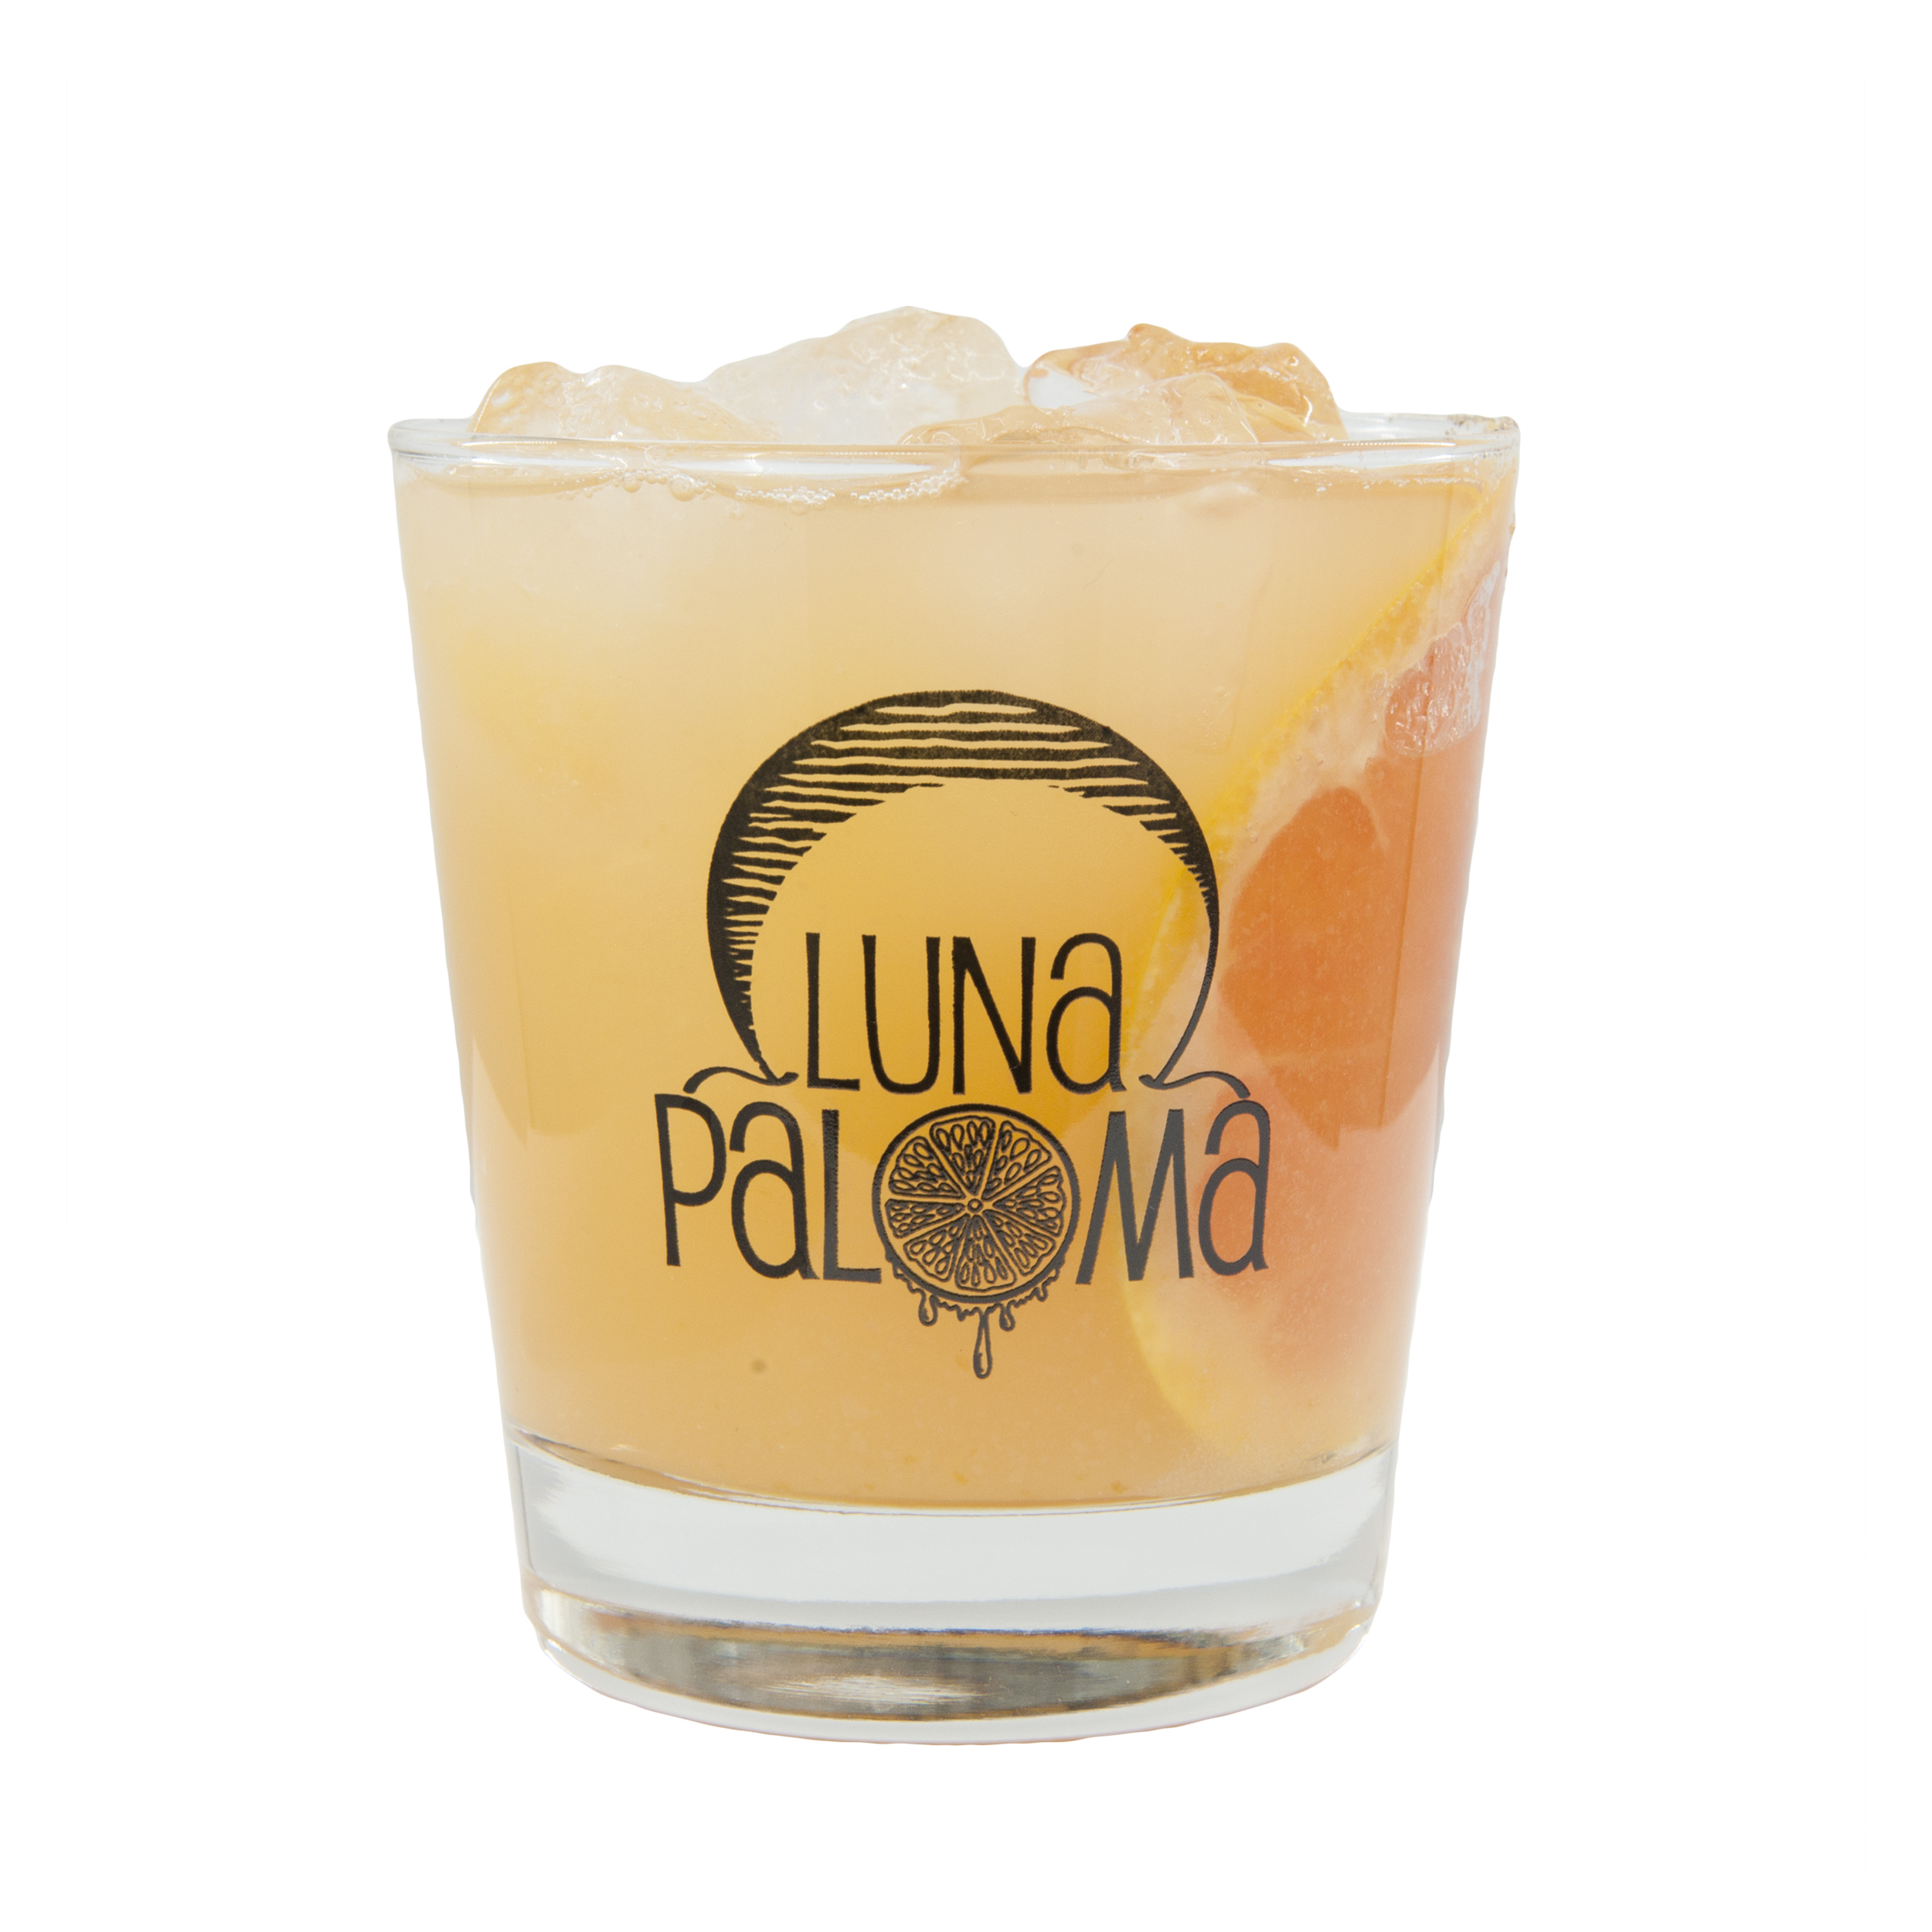 https://summerlakesbeverage.com/wp-content/uploads/2020/06/Tequila_LunaPalomaGrapefruit.jpg